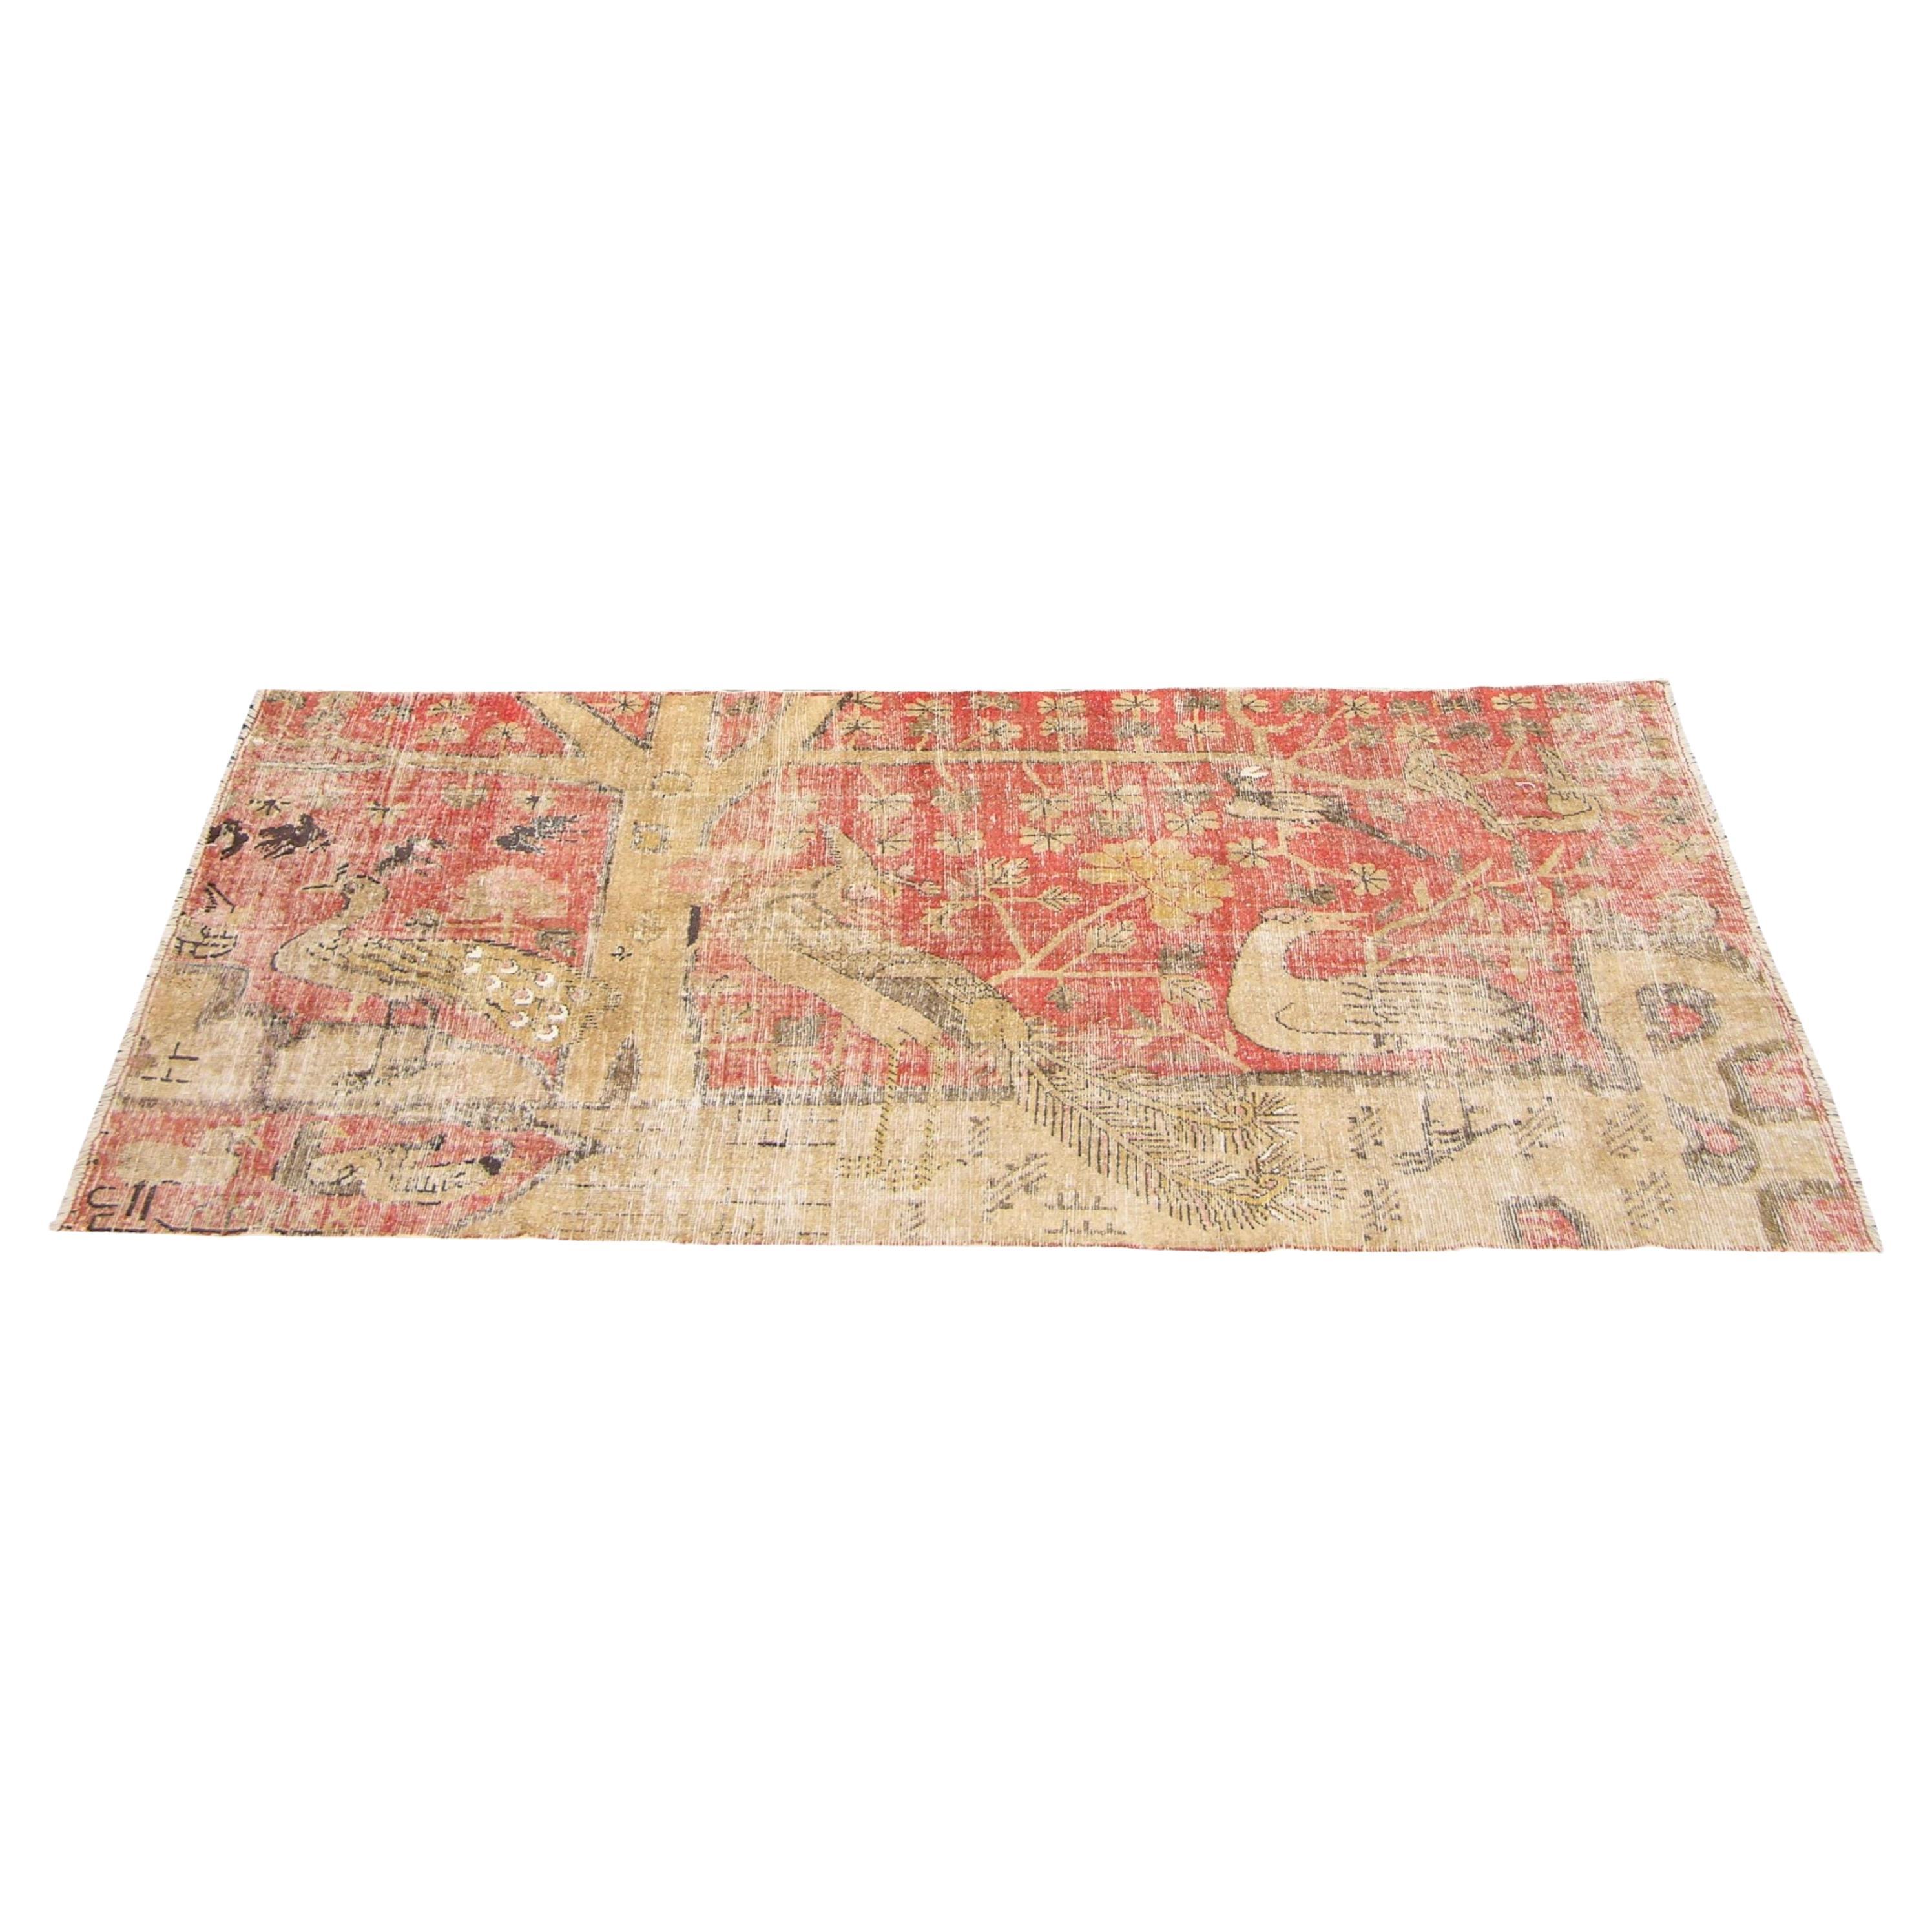 1900s Antike Tier Samarkand Teppich